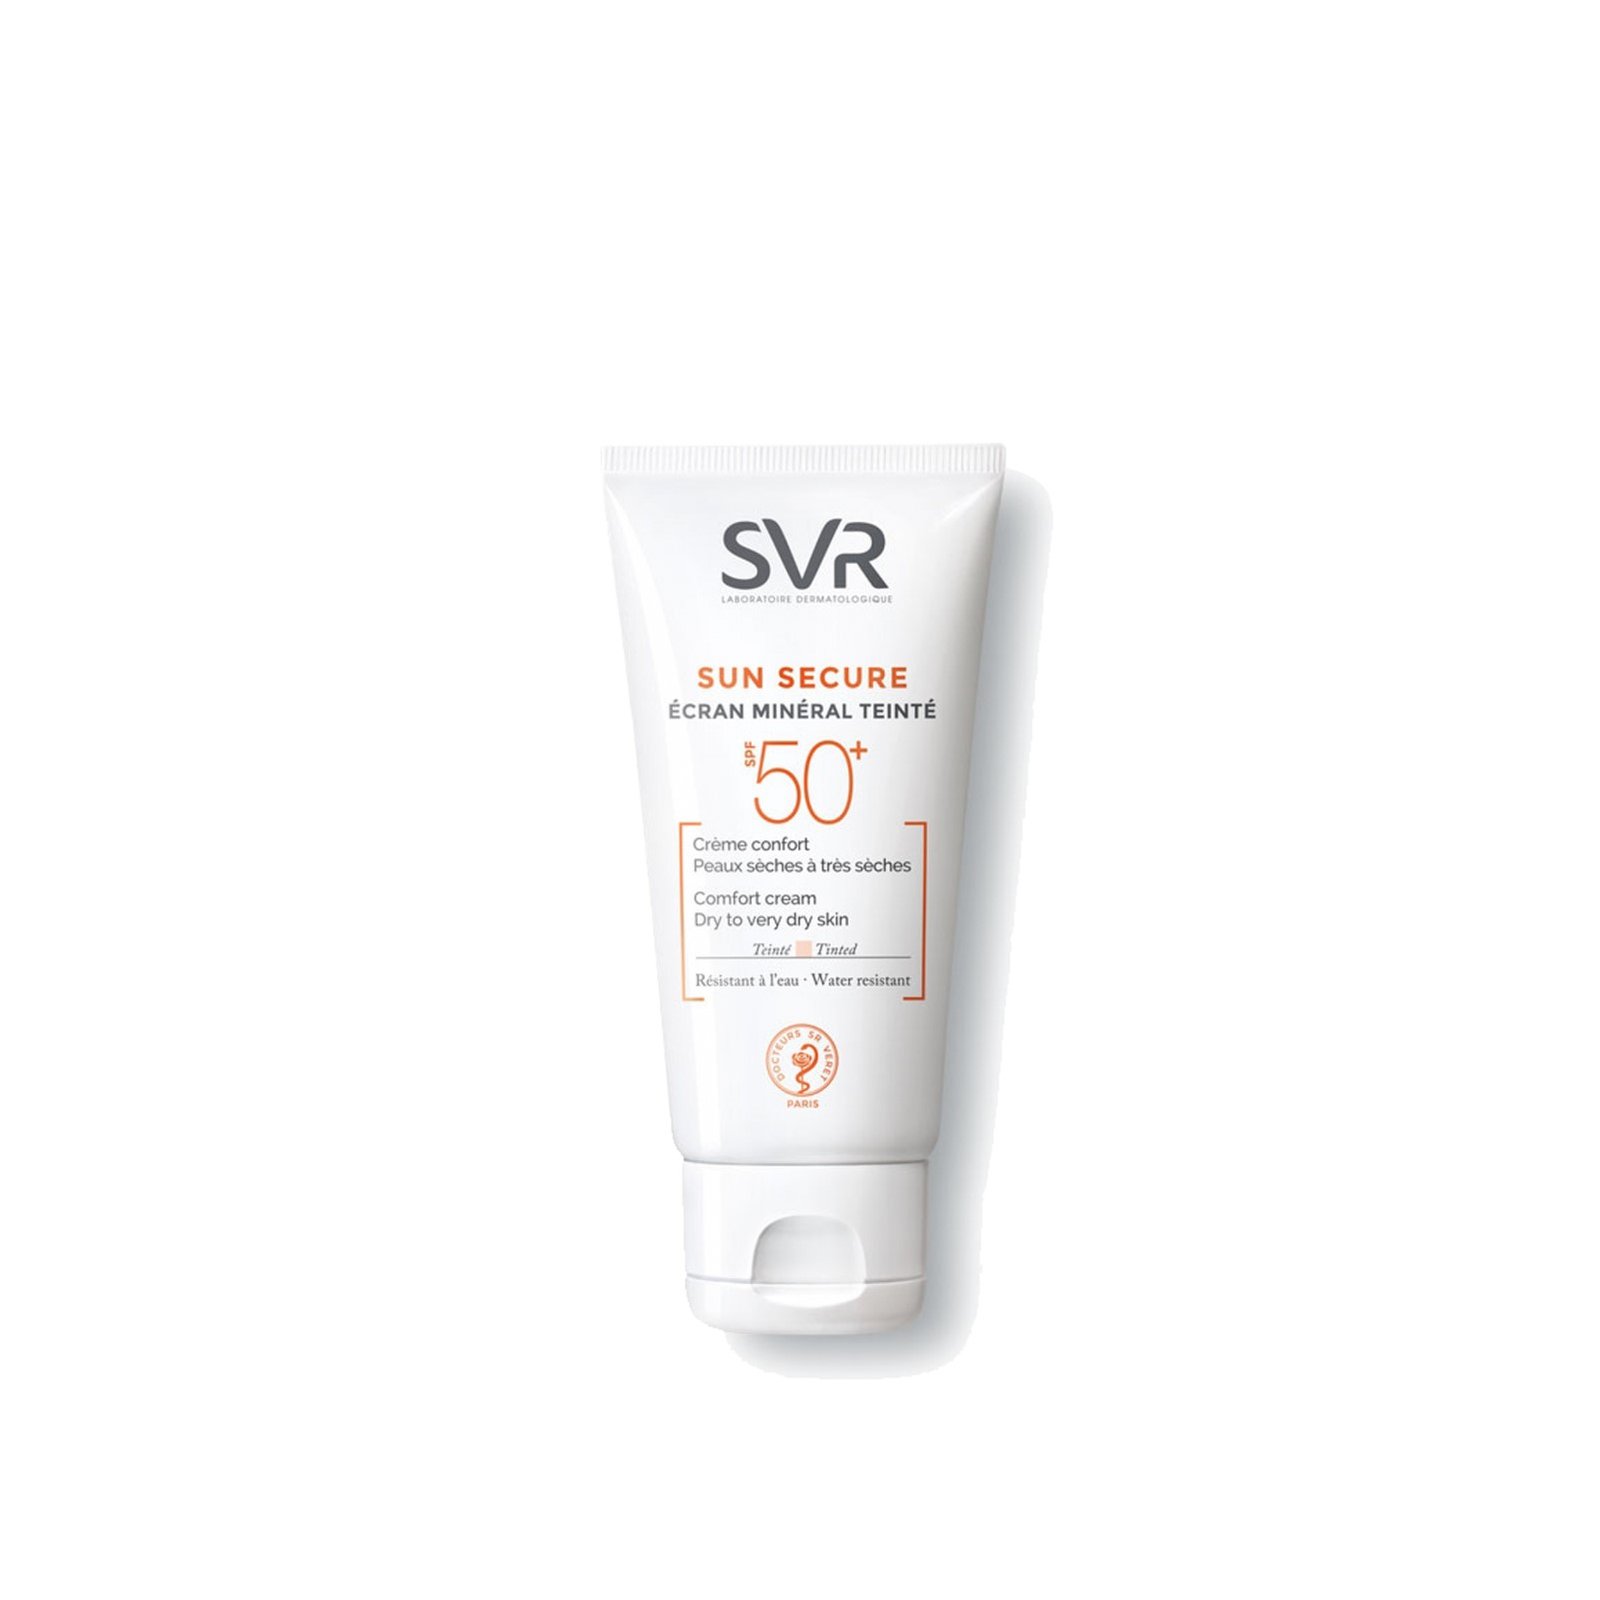 SVR Sun Secure Crème SPF 50+